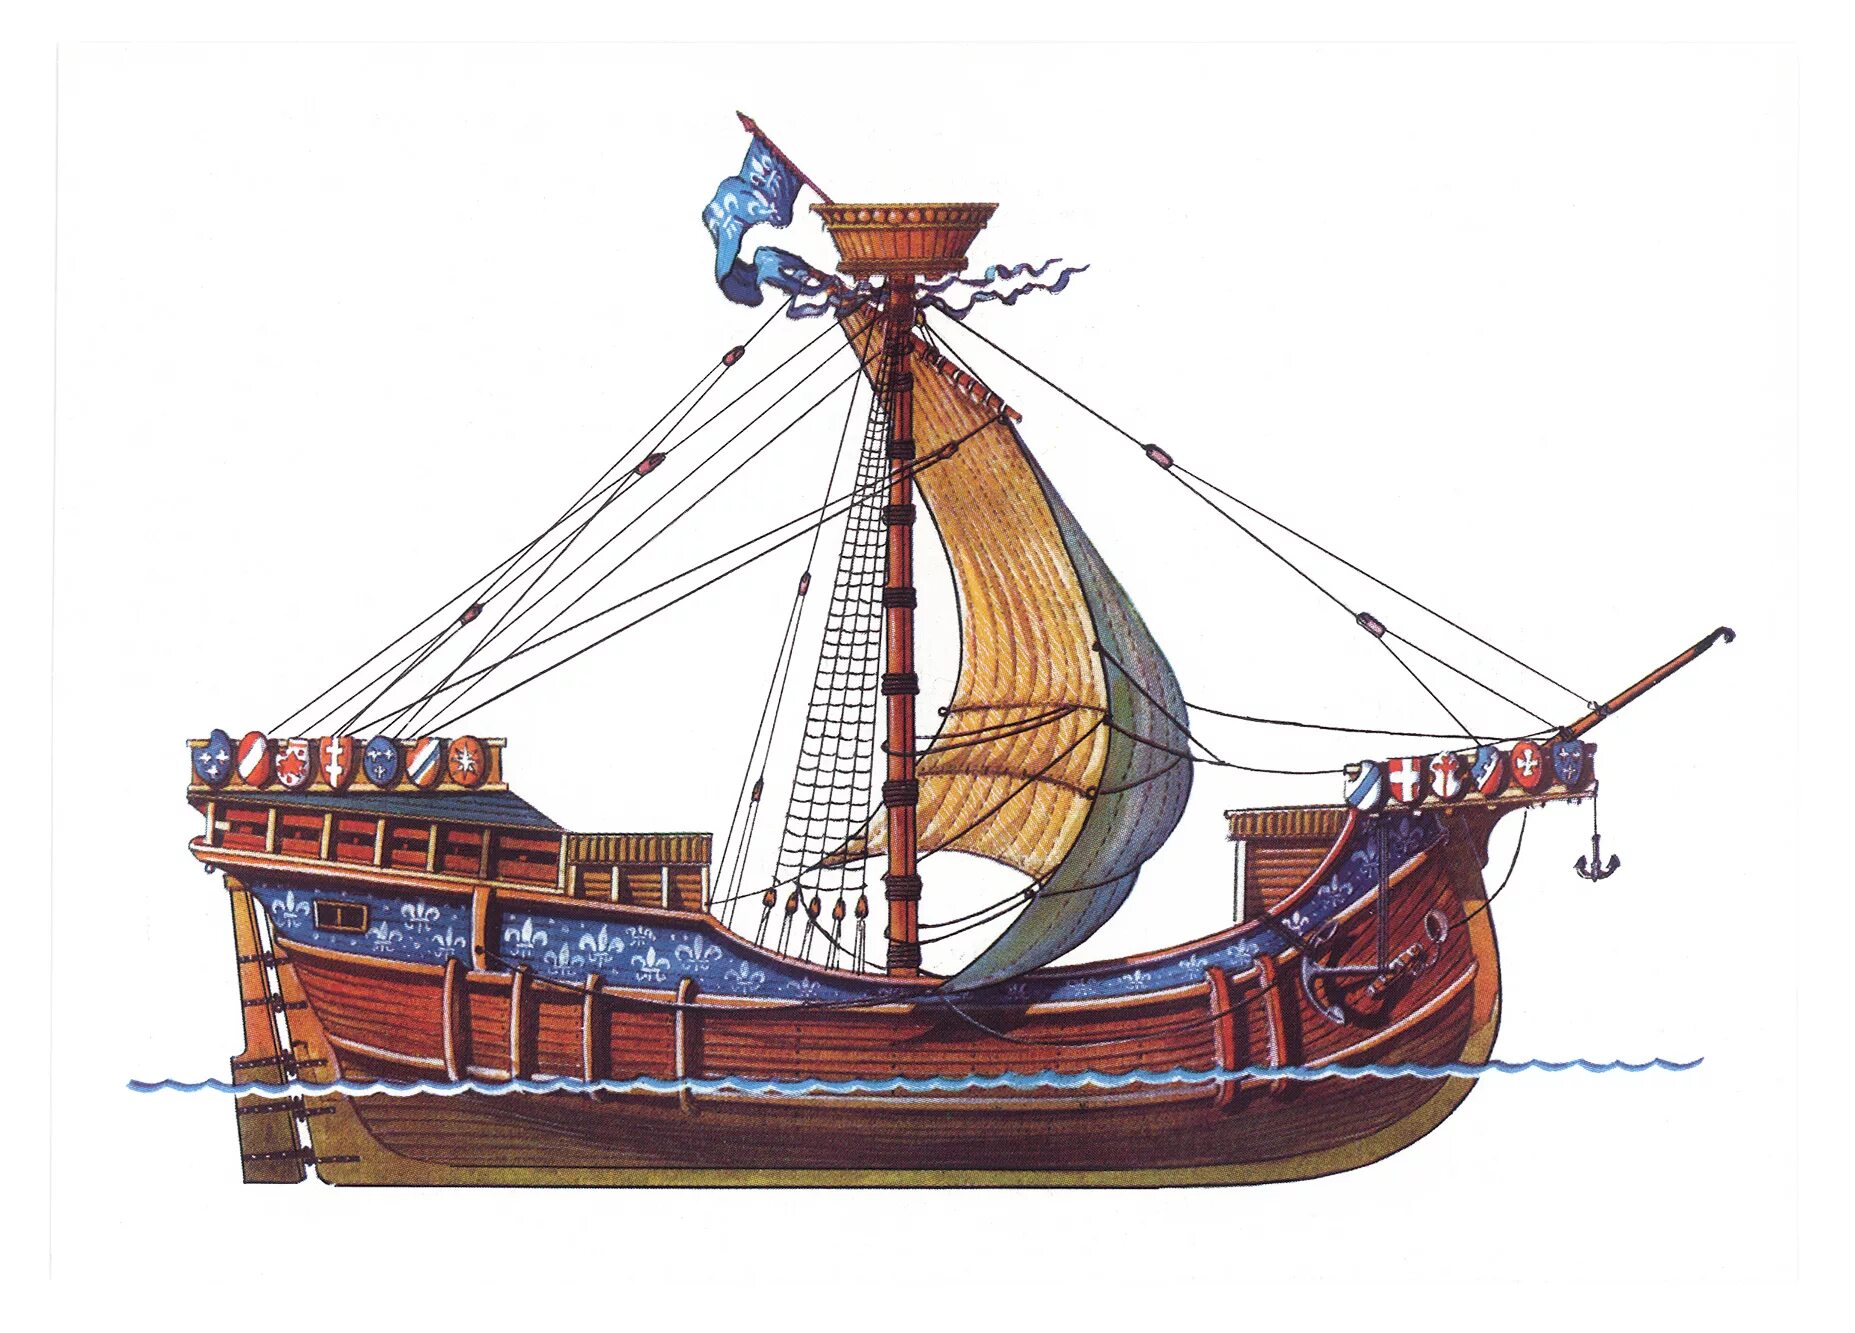 Корабль Когг Когг. Неф корабль 15 века. Неф корабль средневековья. Византийский Неф корабль. Век суда